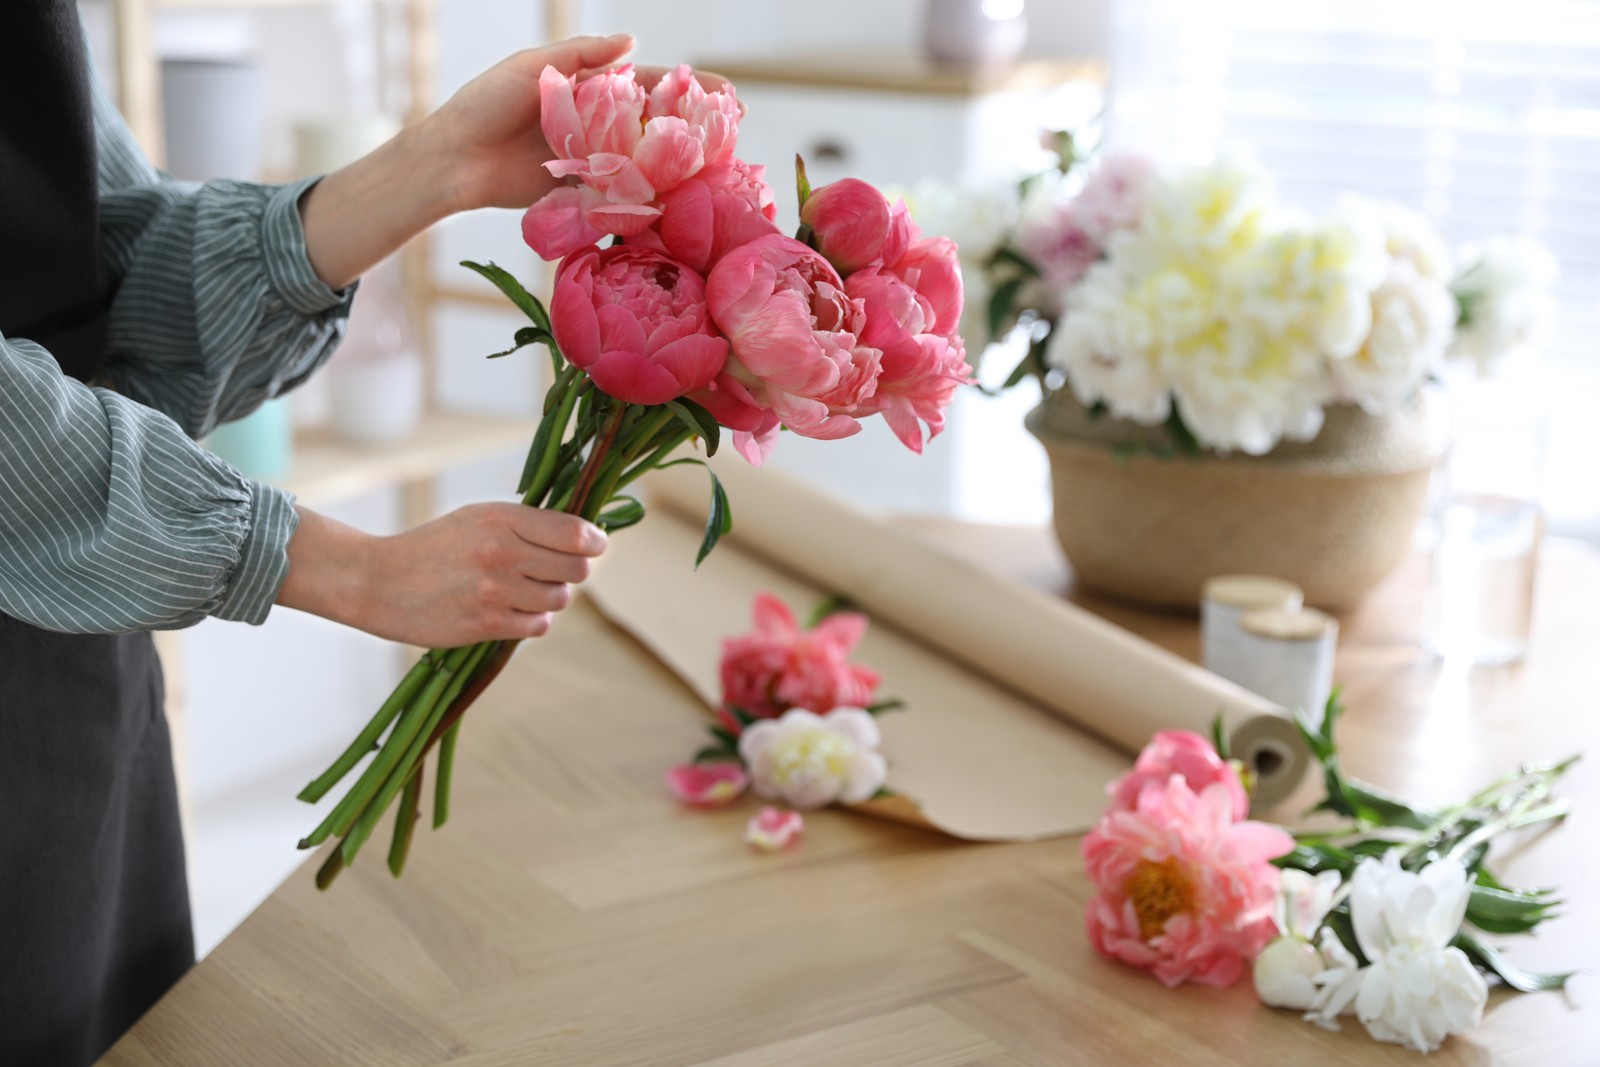 Photo of florist making beautiful peony bouquet at table, closeup